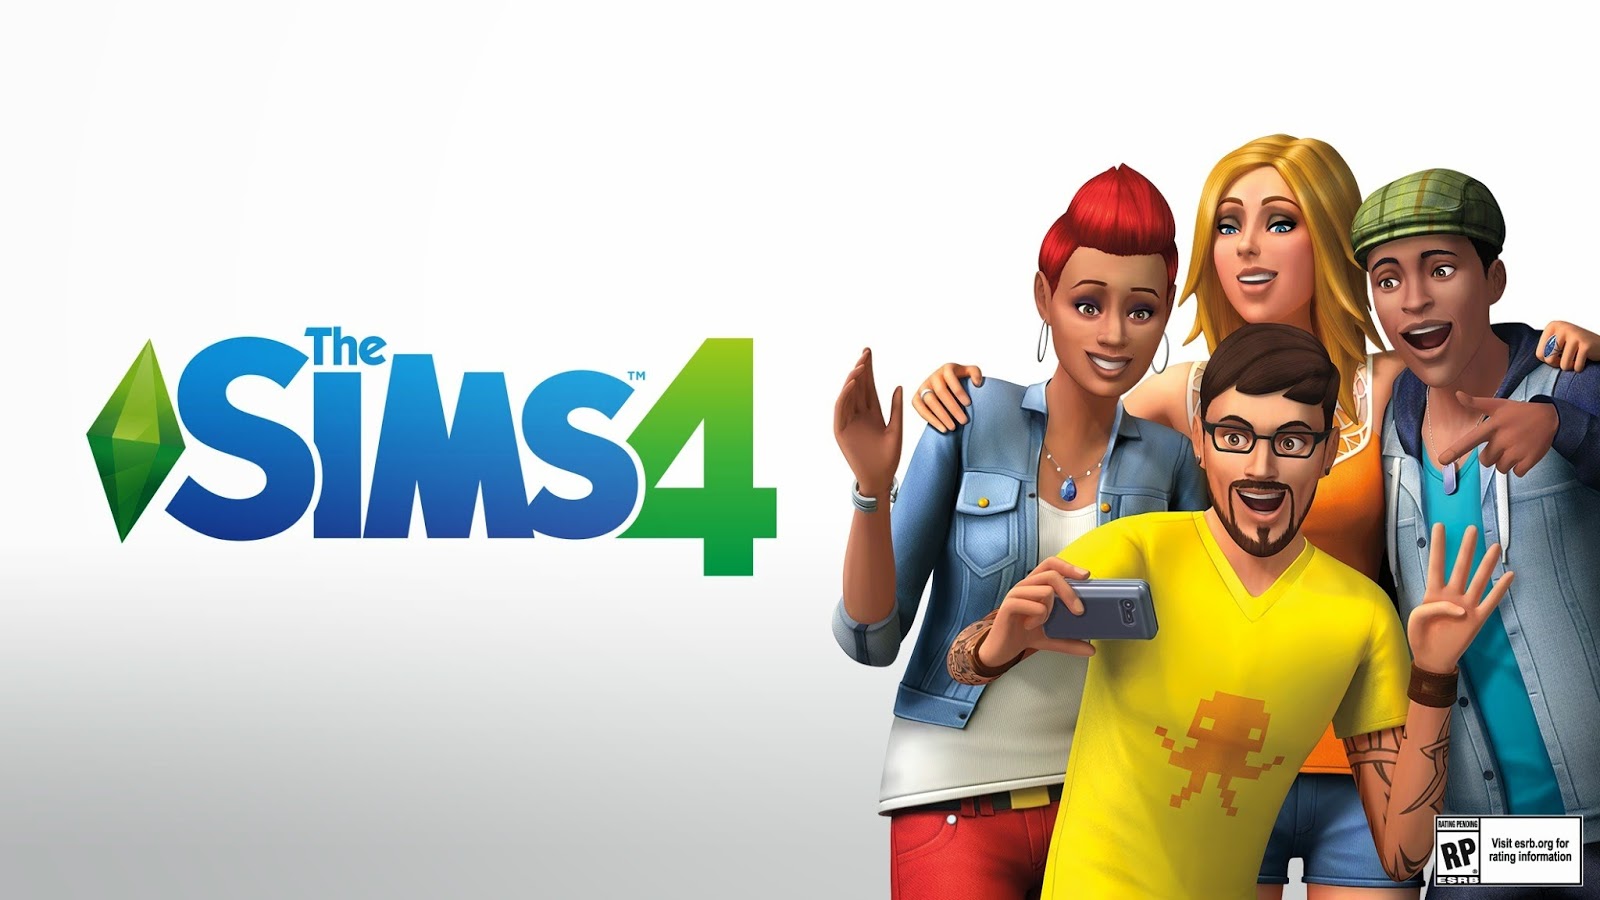 Download Game The Sims 4 Full Version Gratis | Download ...